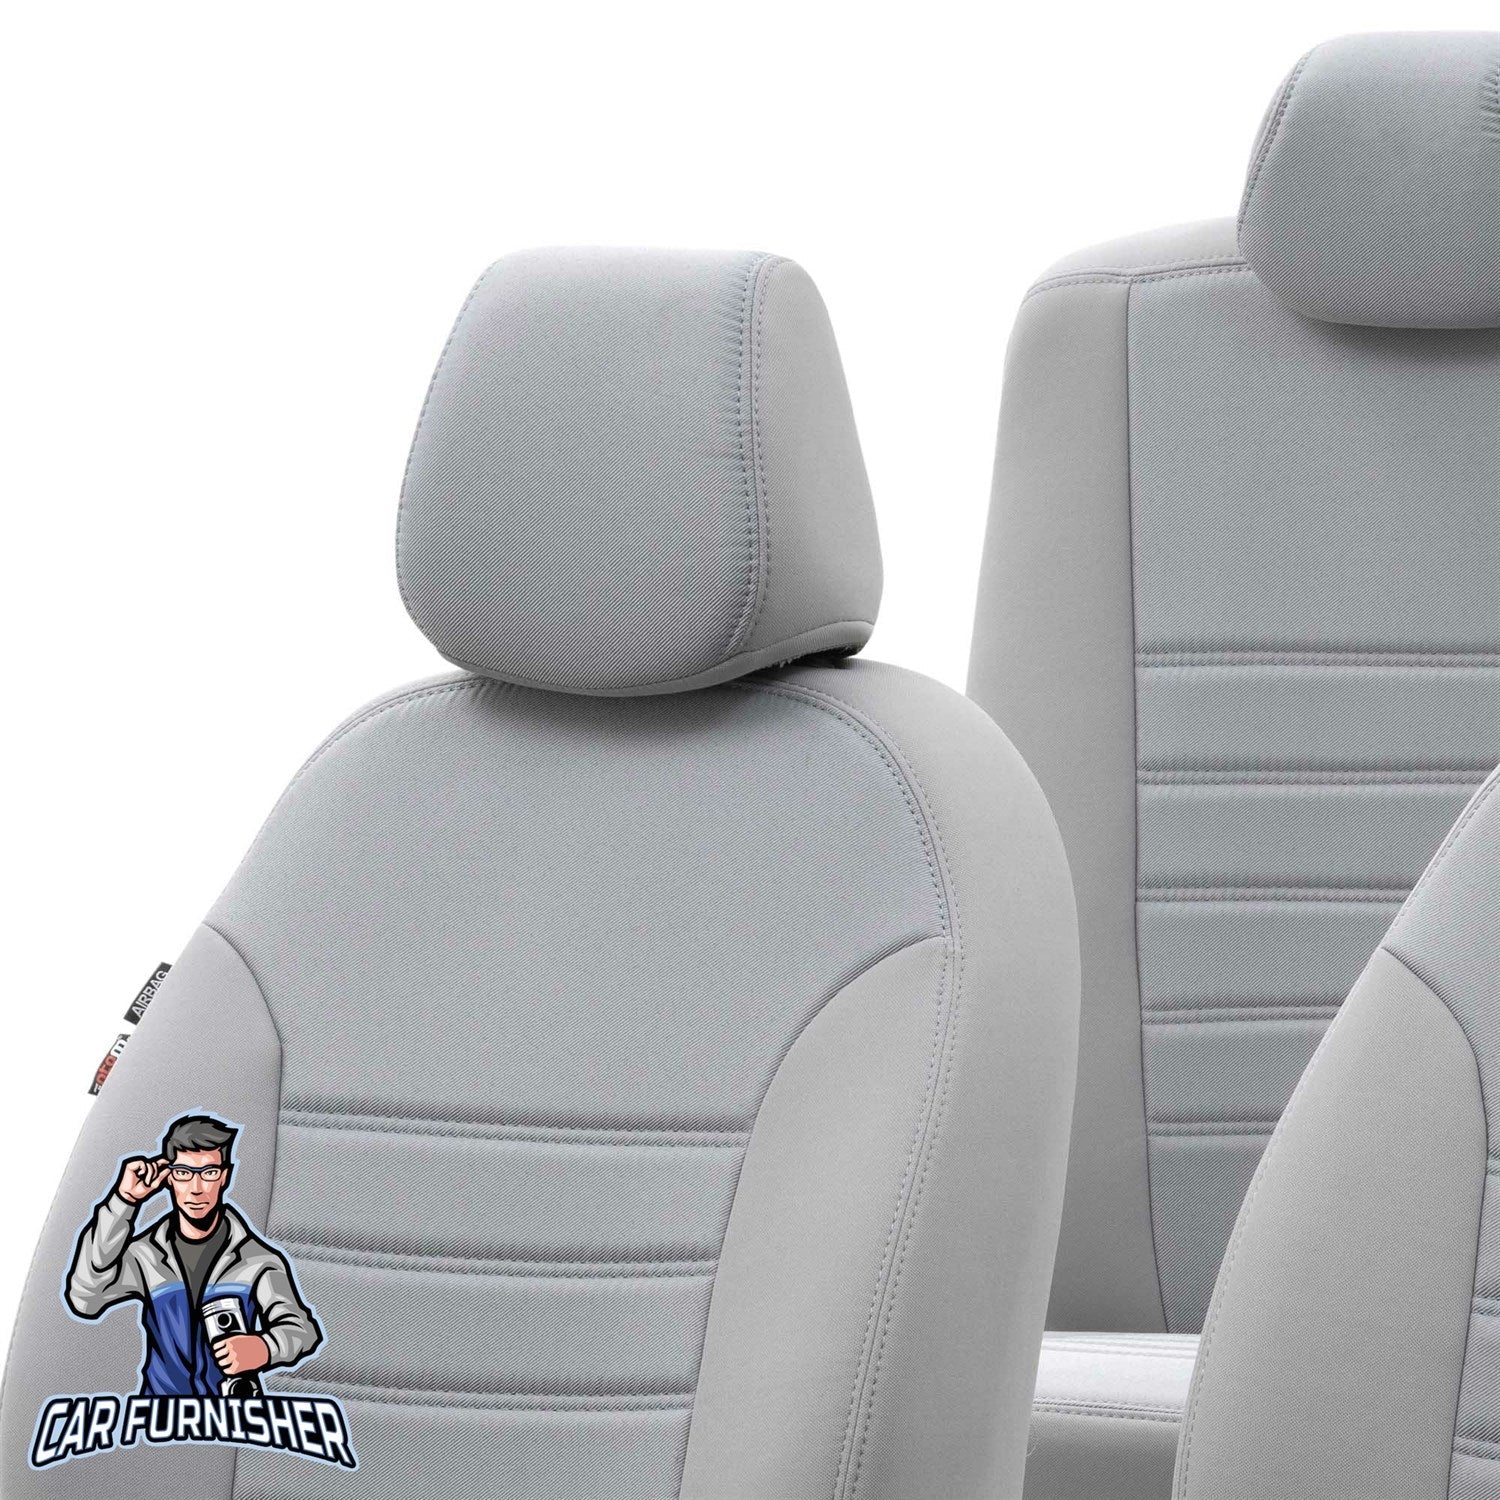 Toyota Corolla Seat Cover Original Jacquard Design Light Gray Jacquard Fabric